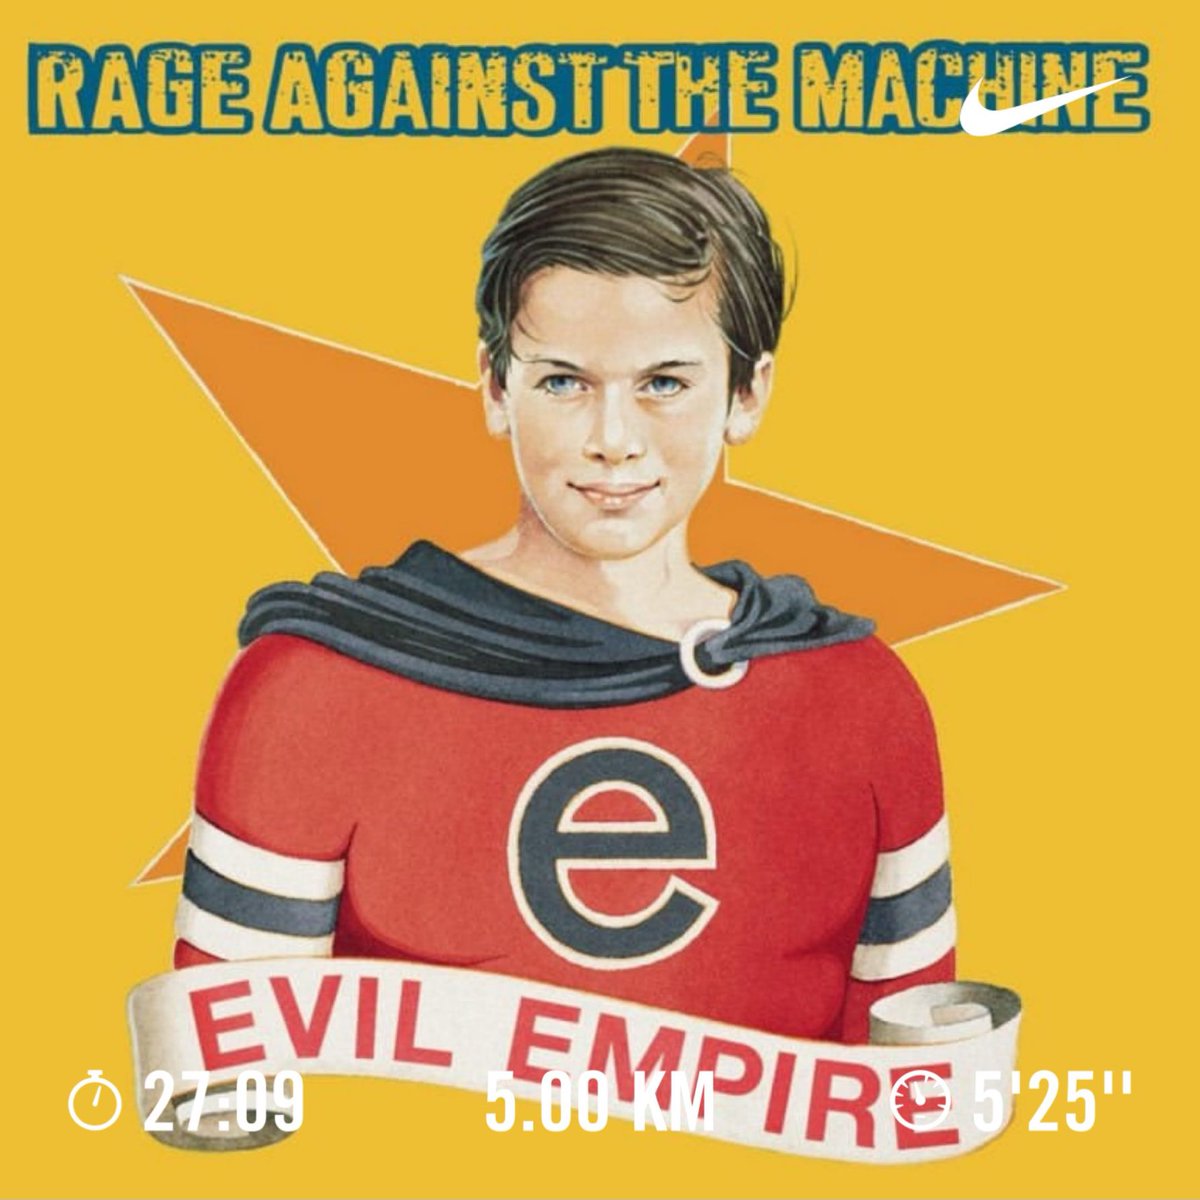 EVIL EMPIRE // Rage Against The Machine // 16 • 04 • 1996

#EvilEmpire #RageAgainstTheMachine #Rock #AlternativeMetal #RapMetal #NRC #Running #NikeRunning #ComeRunWithUs #JustDoIt #RunWithMusic #AlbumOfTheDay